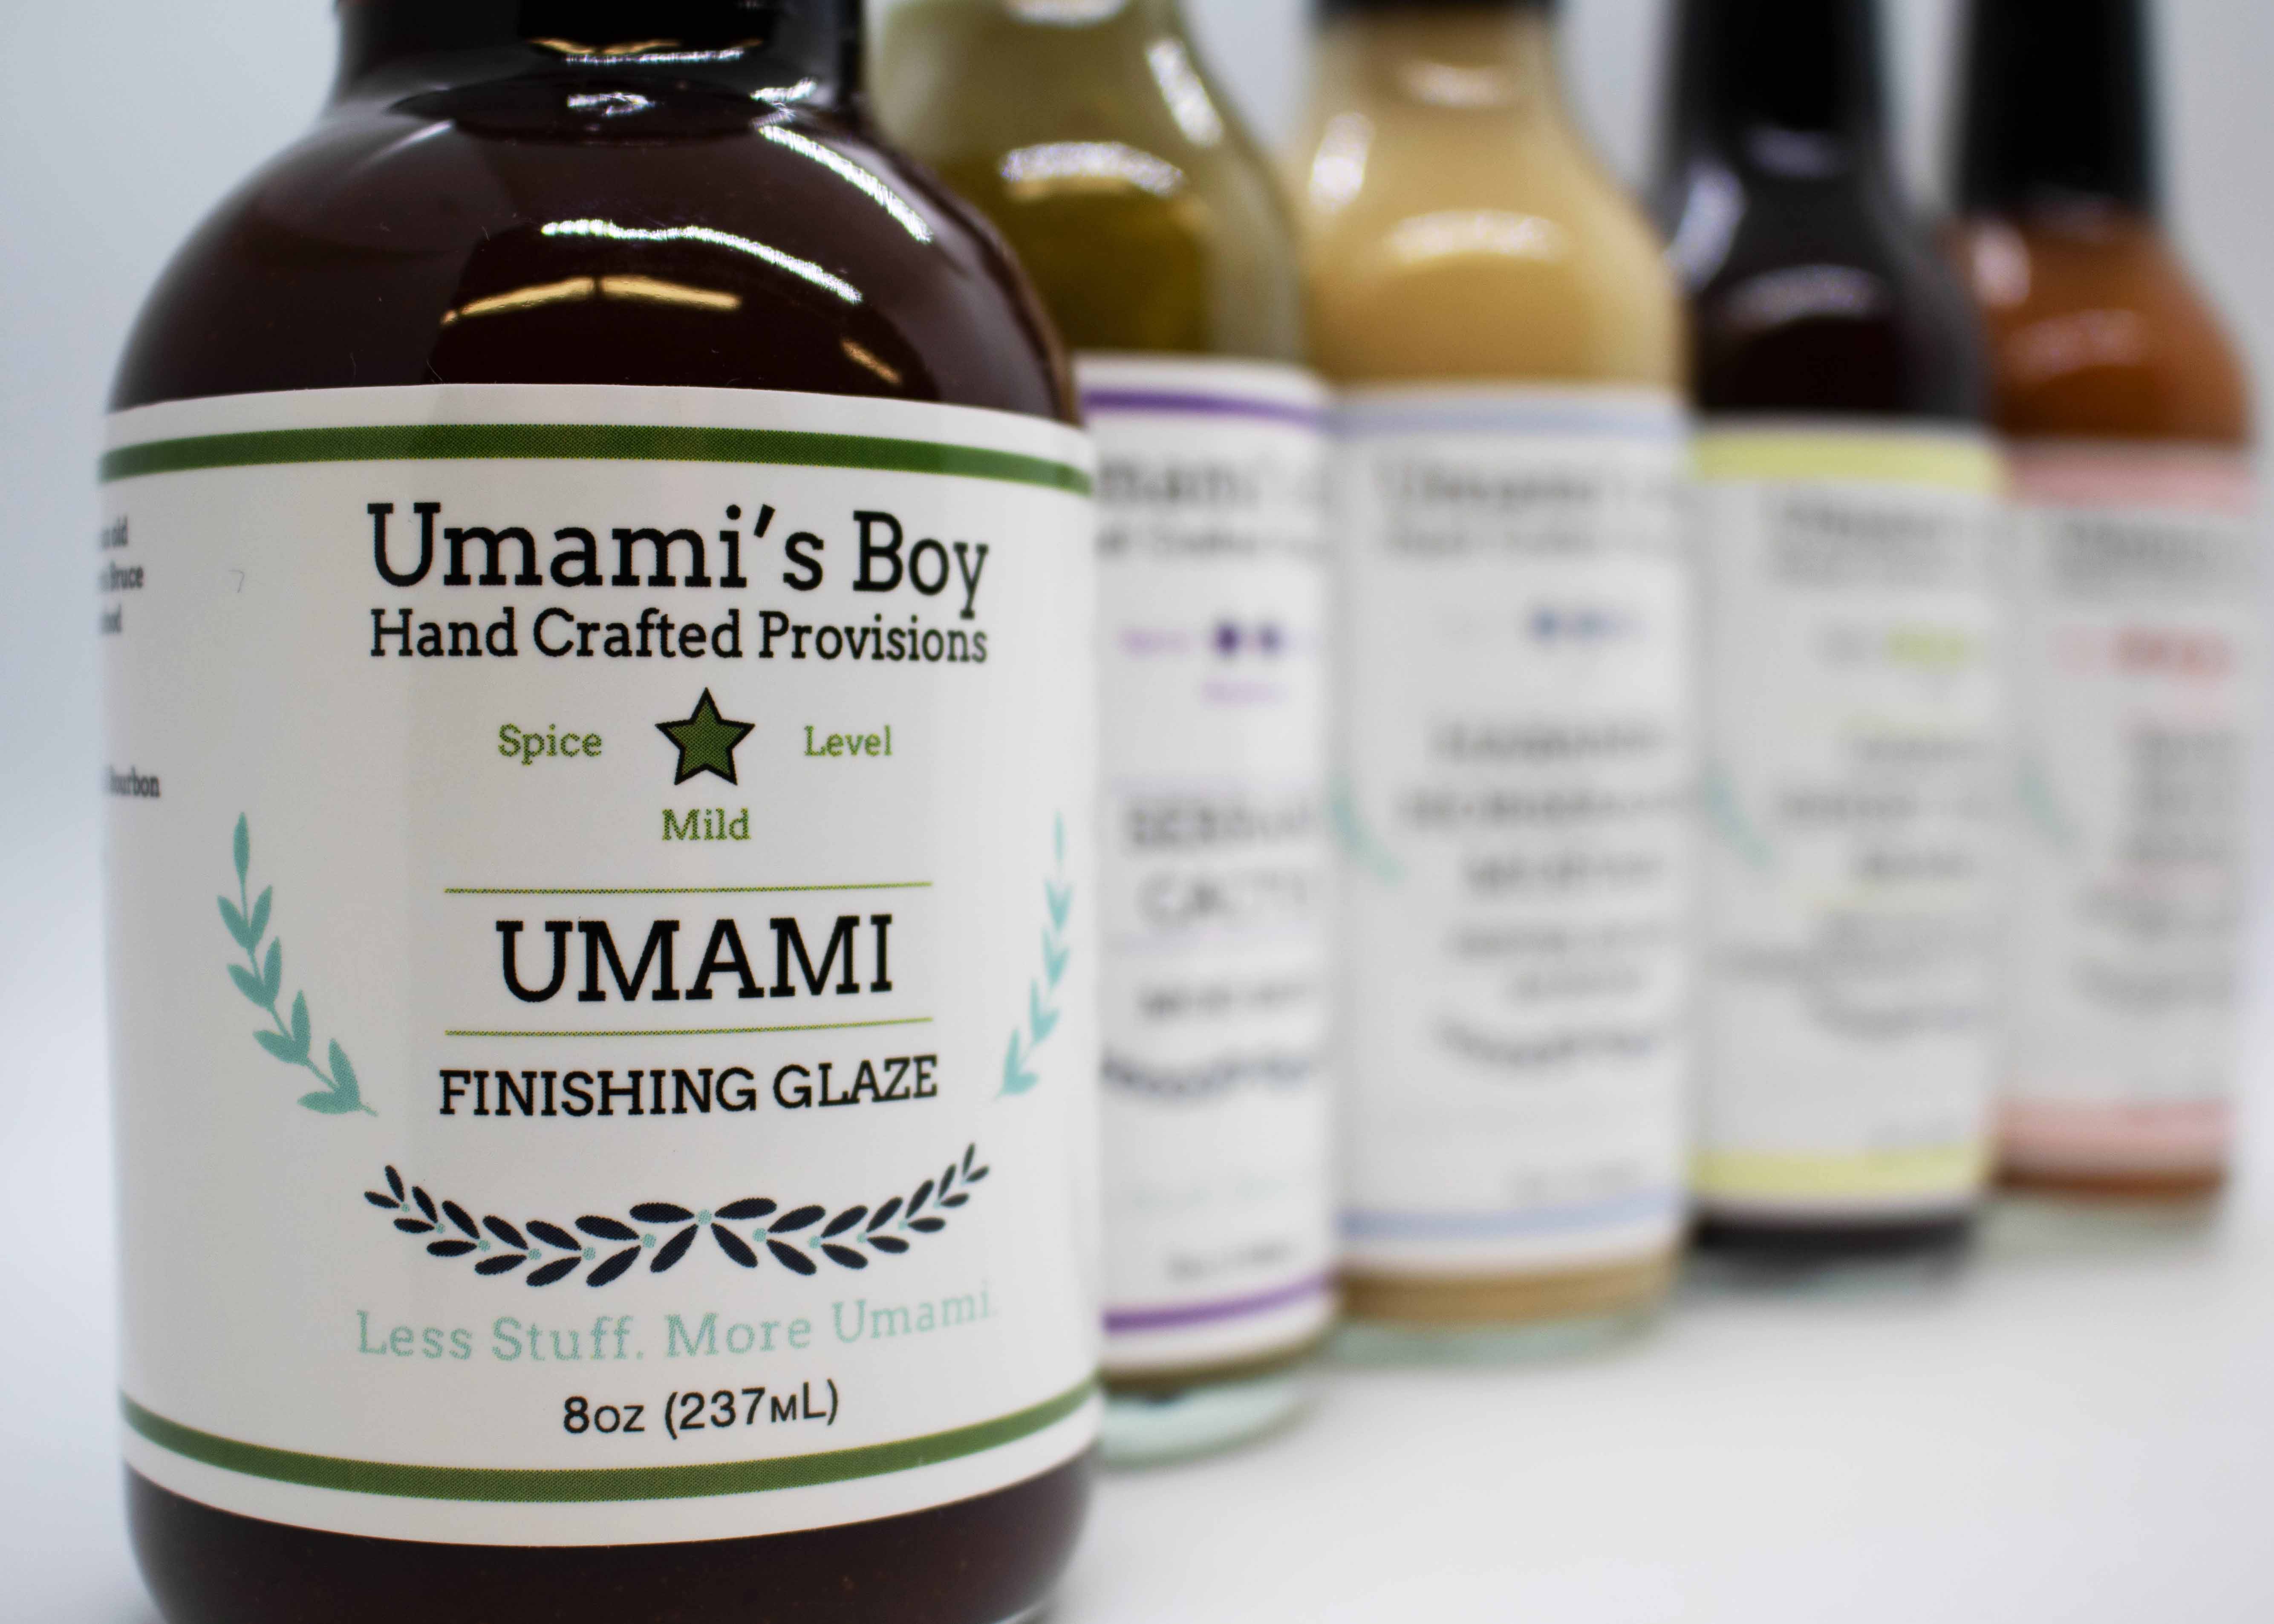 umami's boy bottles